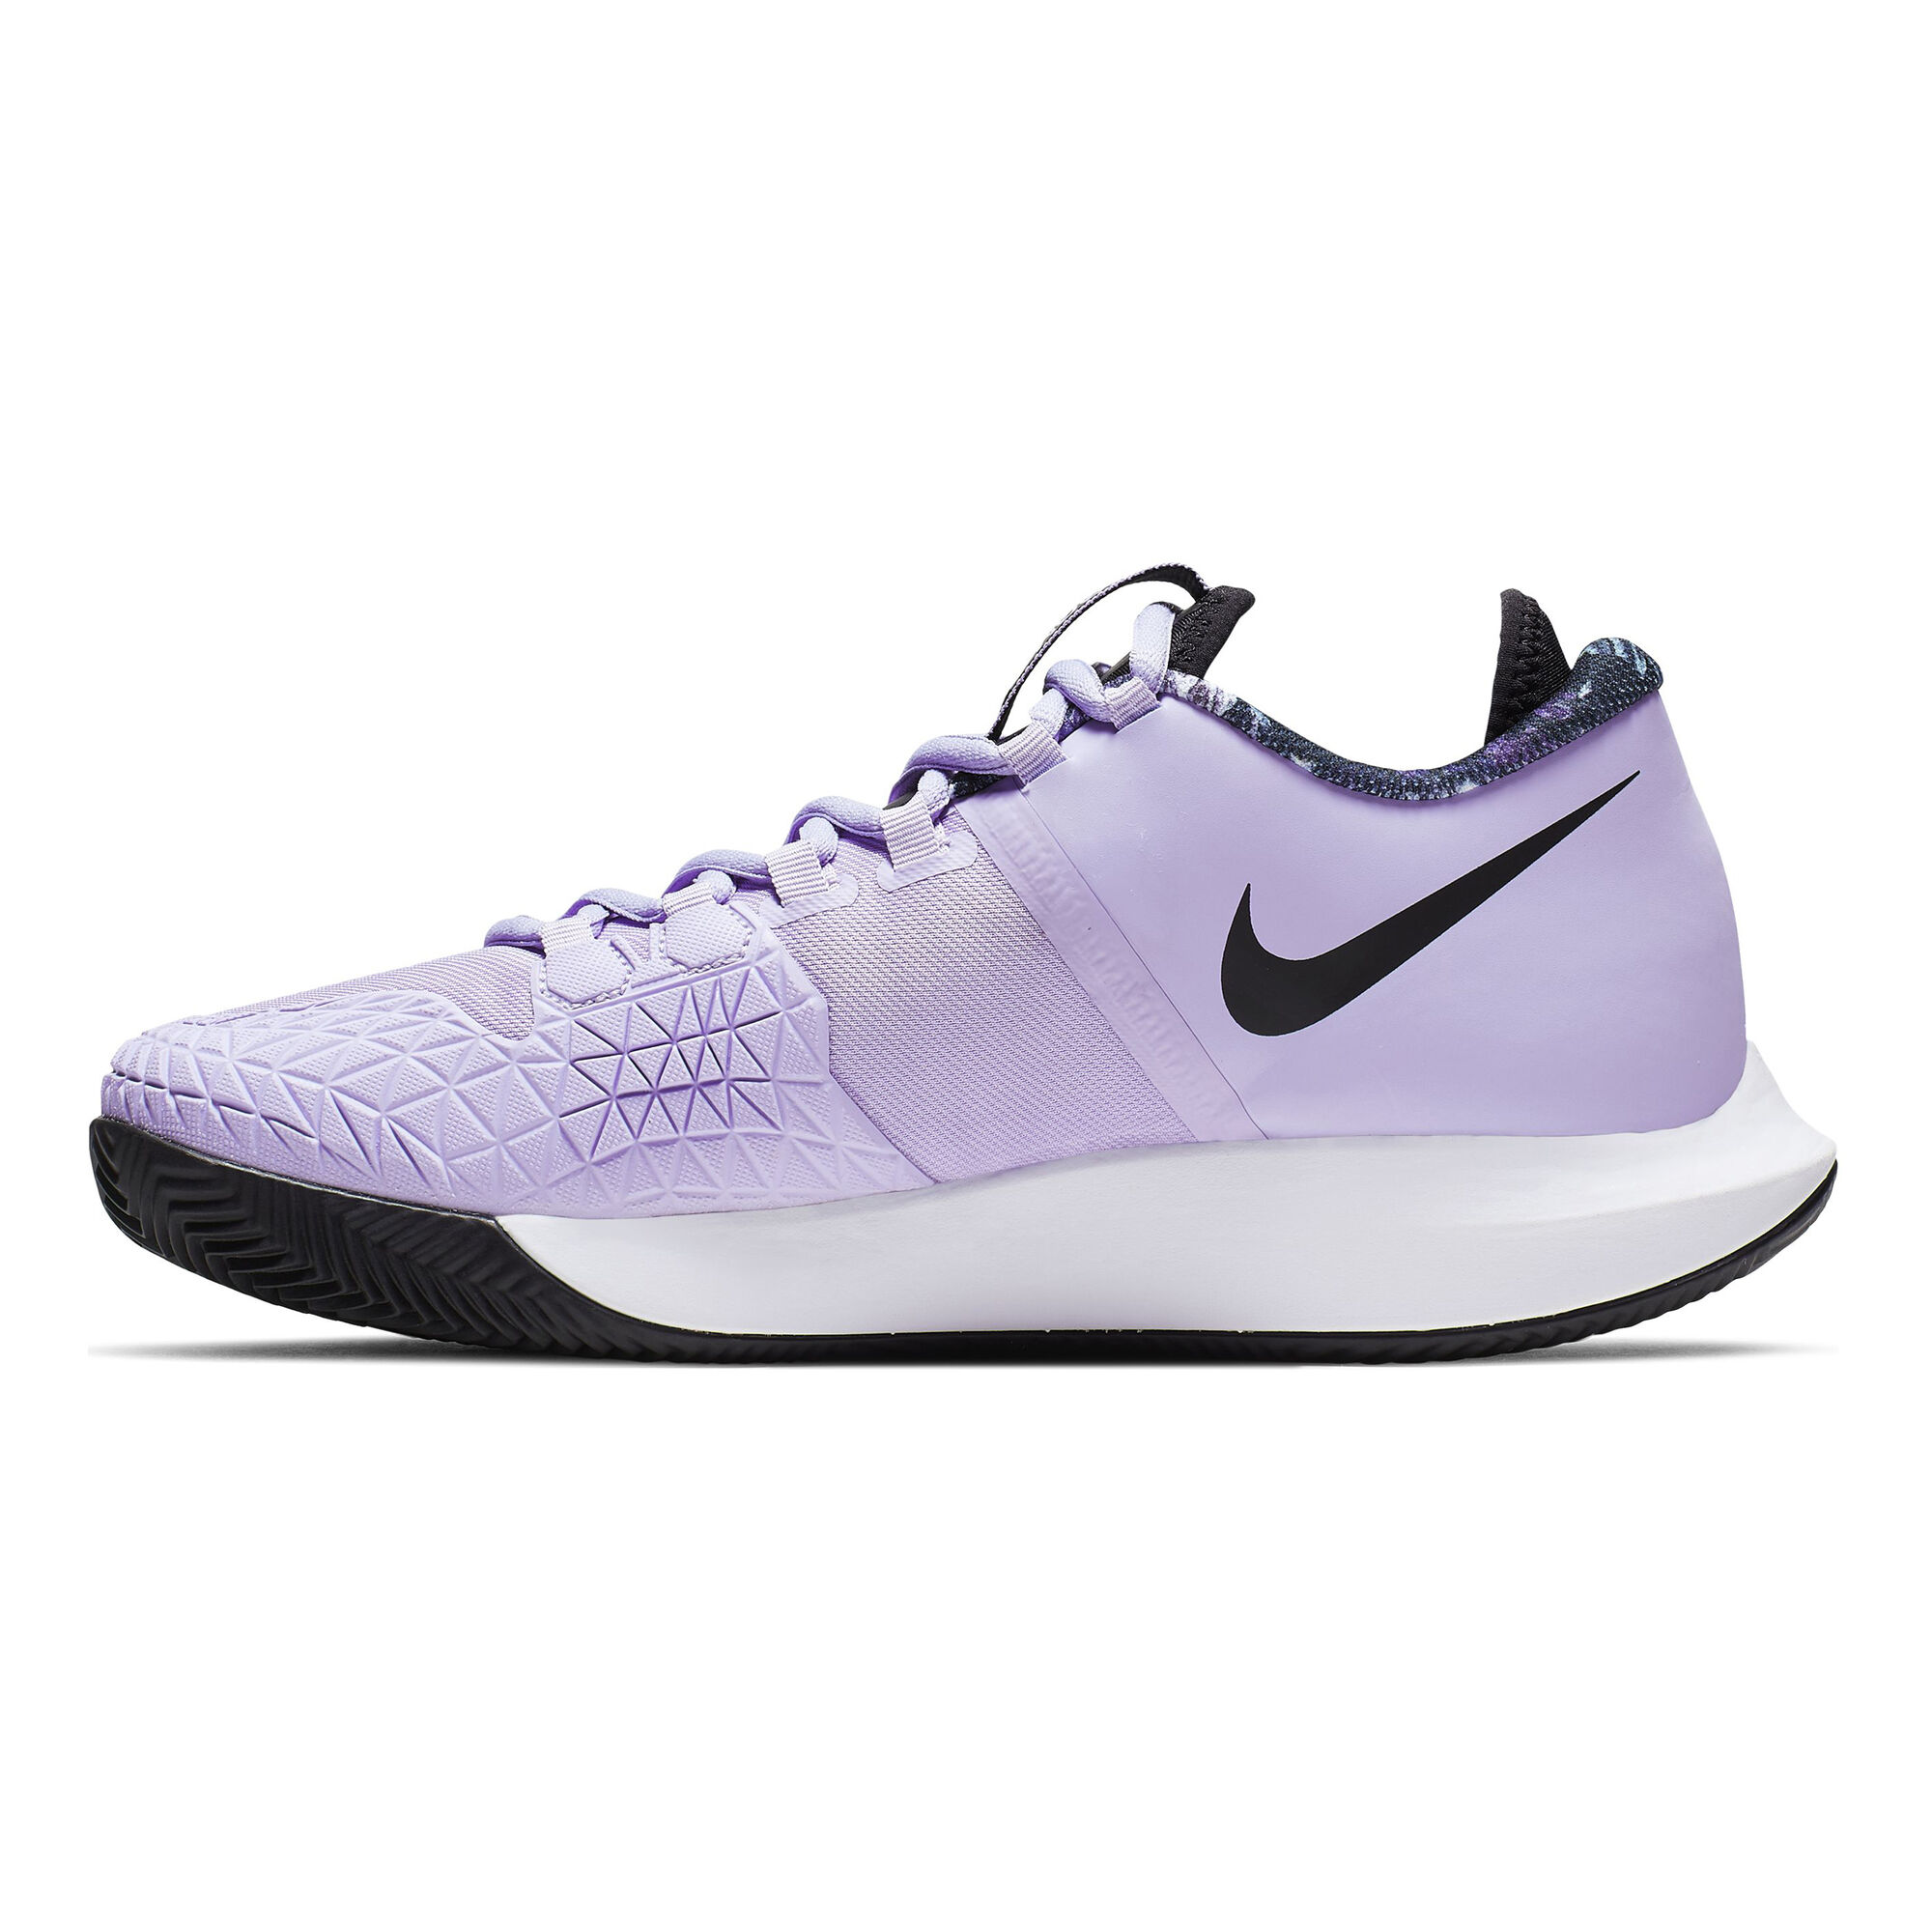 buy Nike Air Zoom Zero Clay Court Shoe Women - Lilac, Black online ...